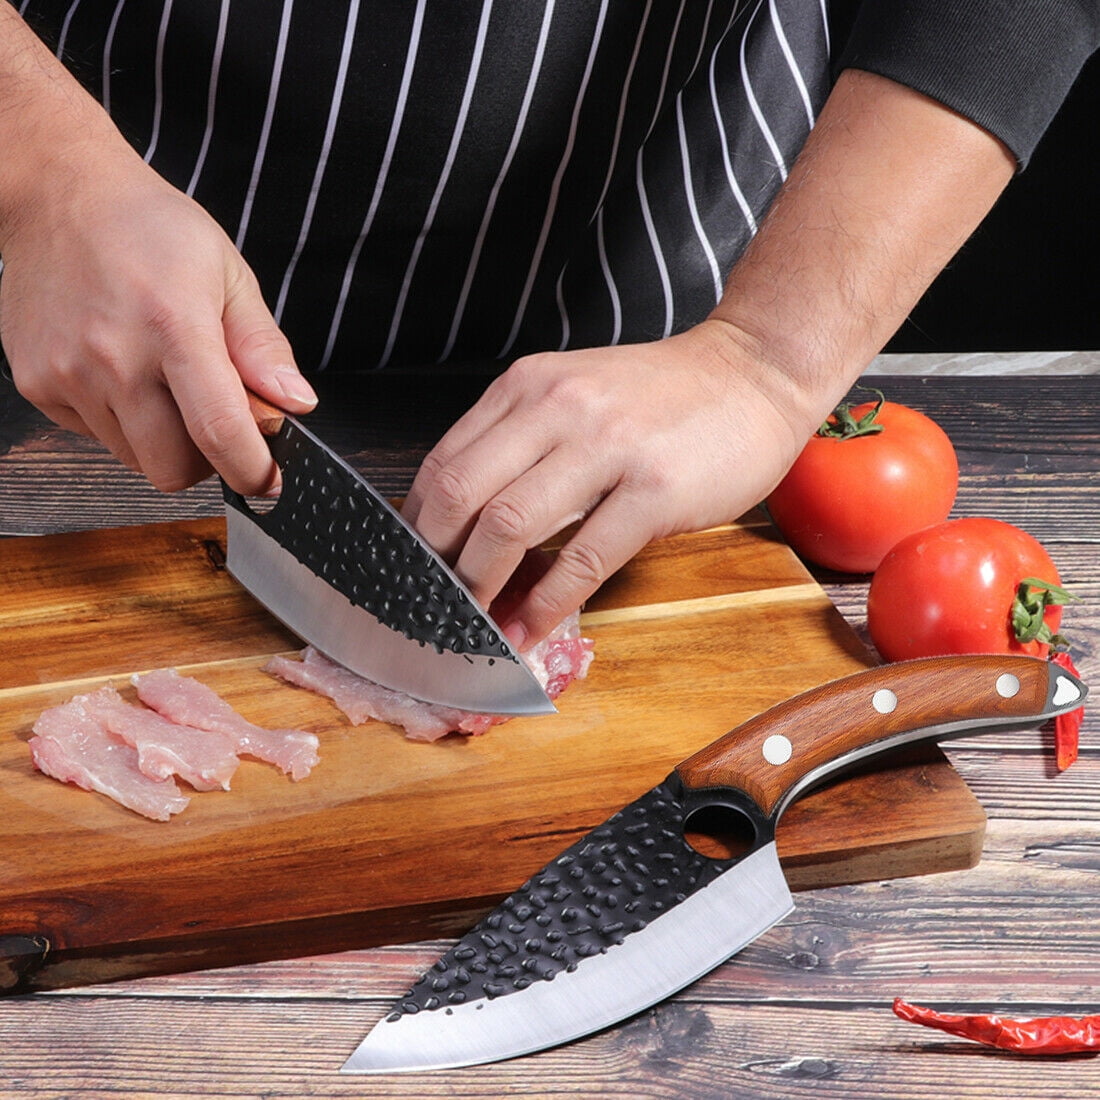 5 BBQ Knife Kitchen Knives Hand Forged Carbon Steel Black Chef's Knife Set